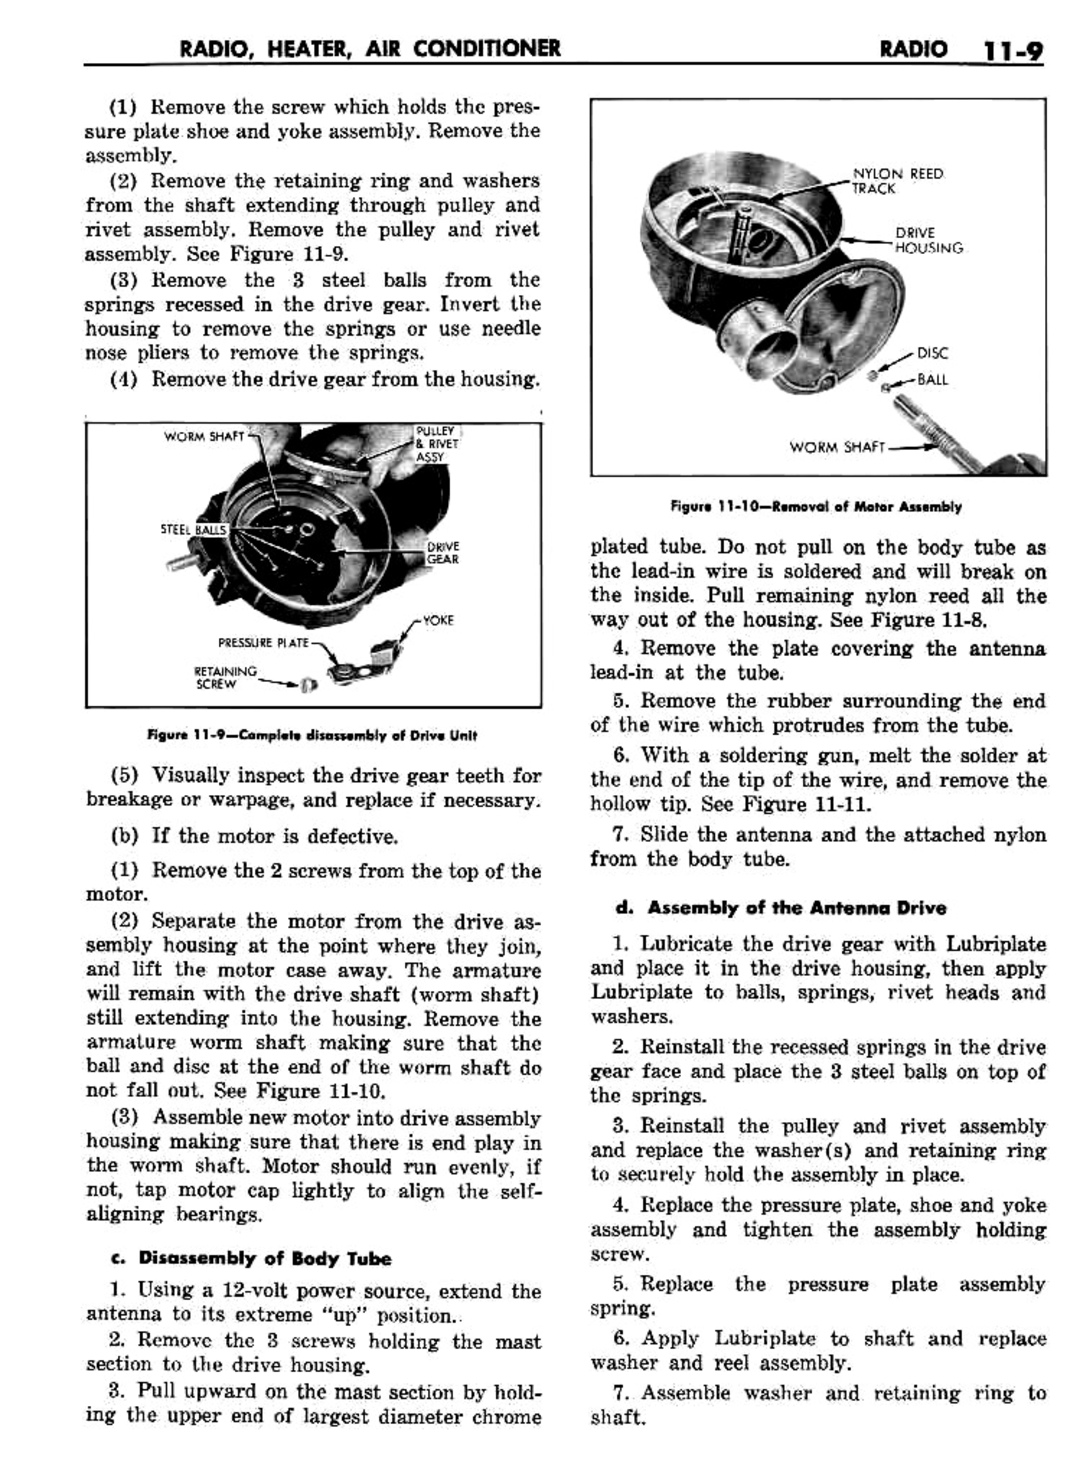 n_12 1960 Buick Shop Manual - Radio-Heater-AC-009-009.jpg